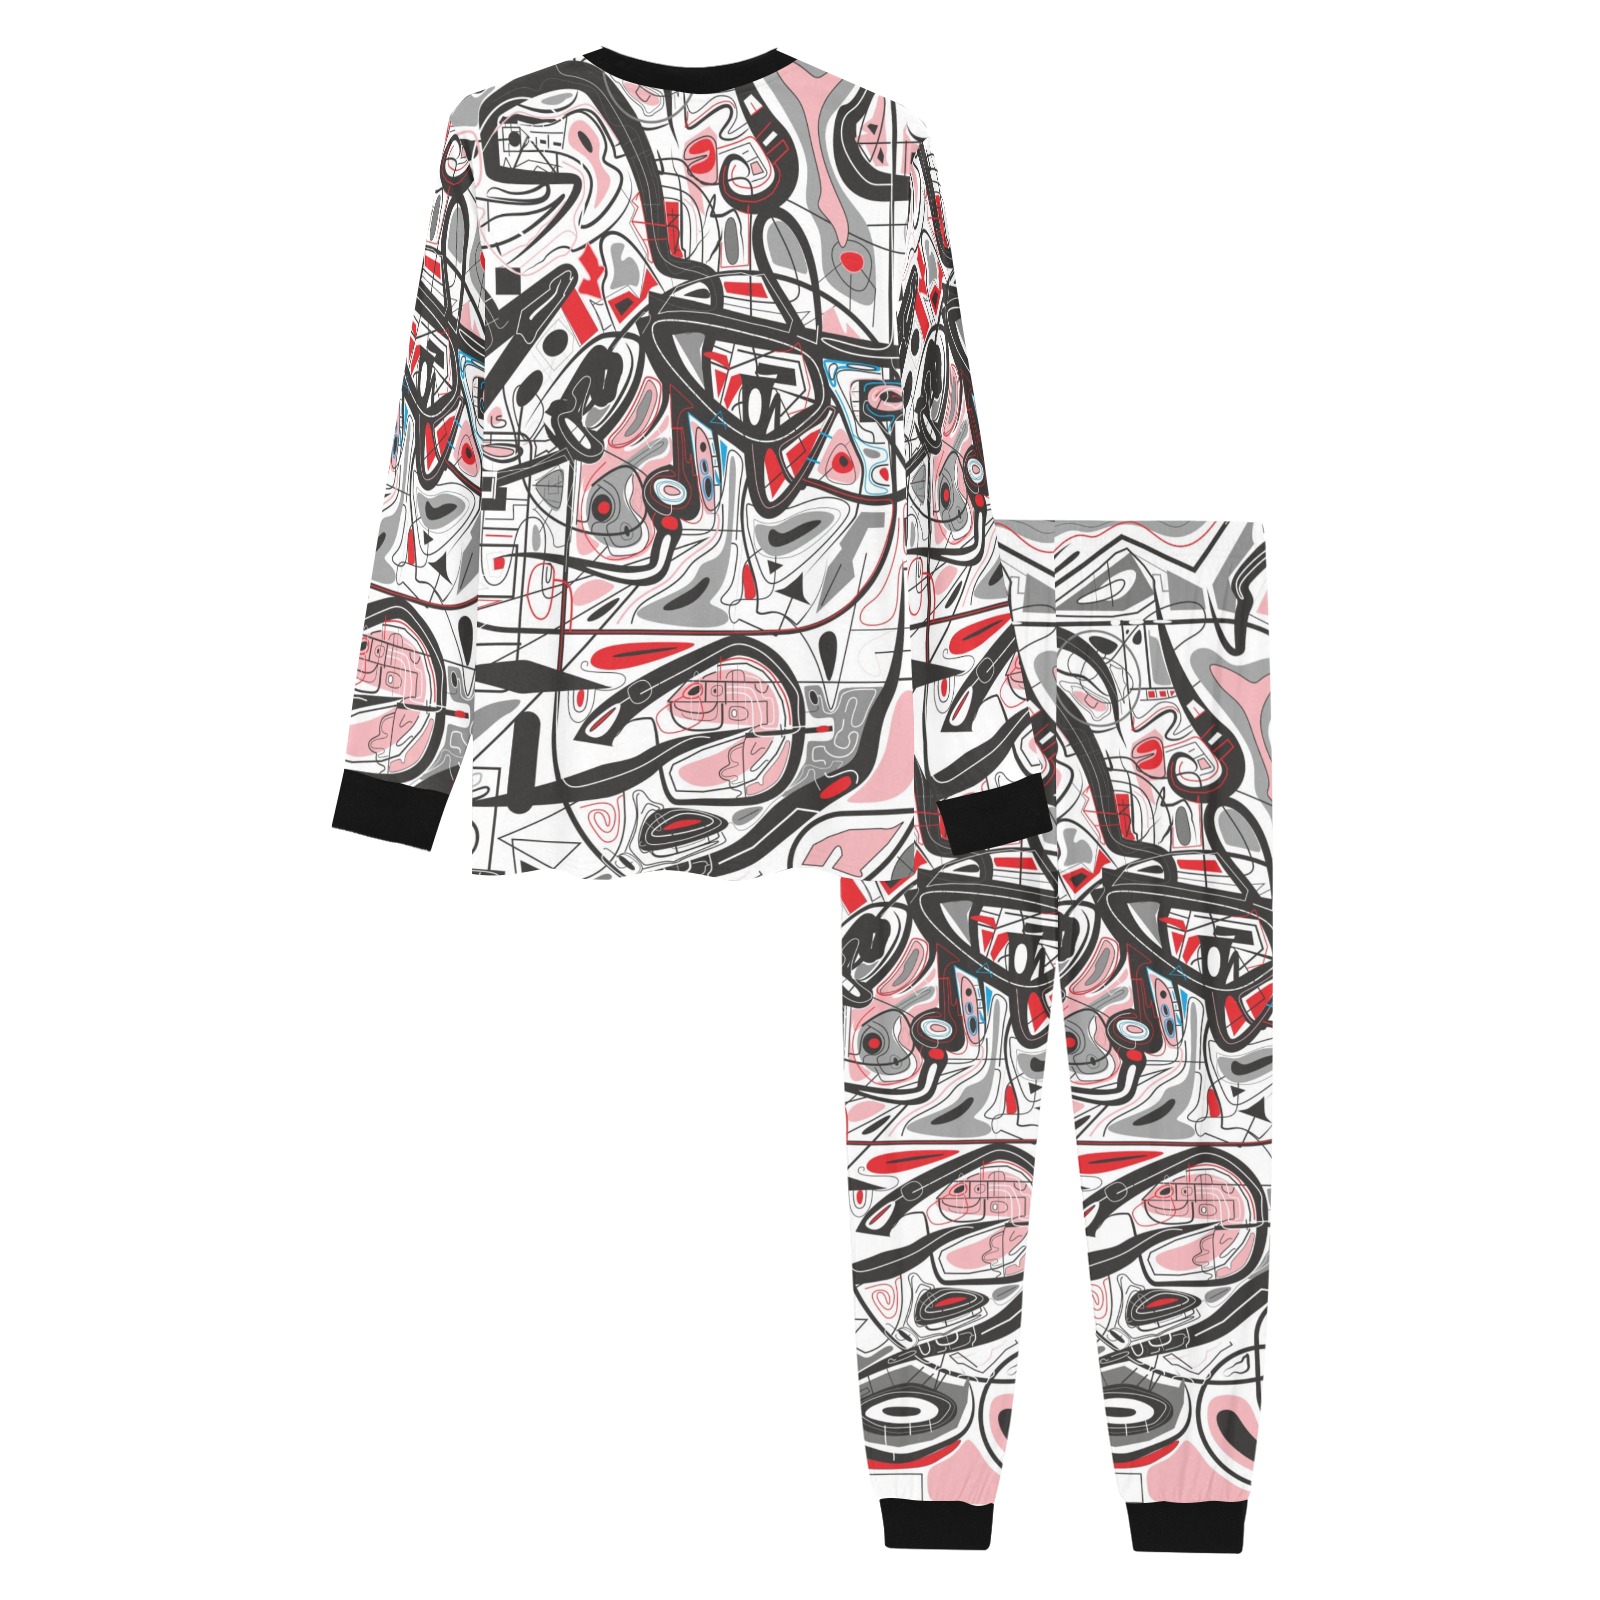 Model 2 Men's All Over Print Pajama Set